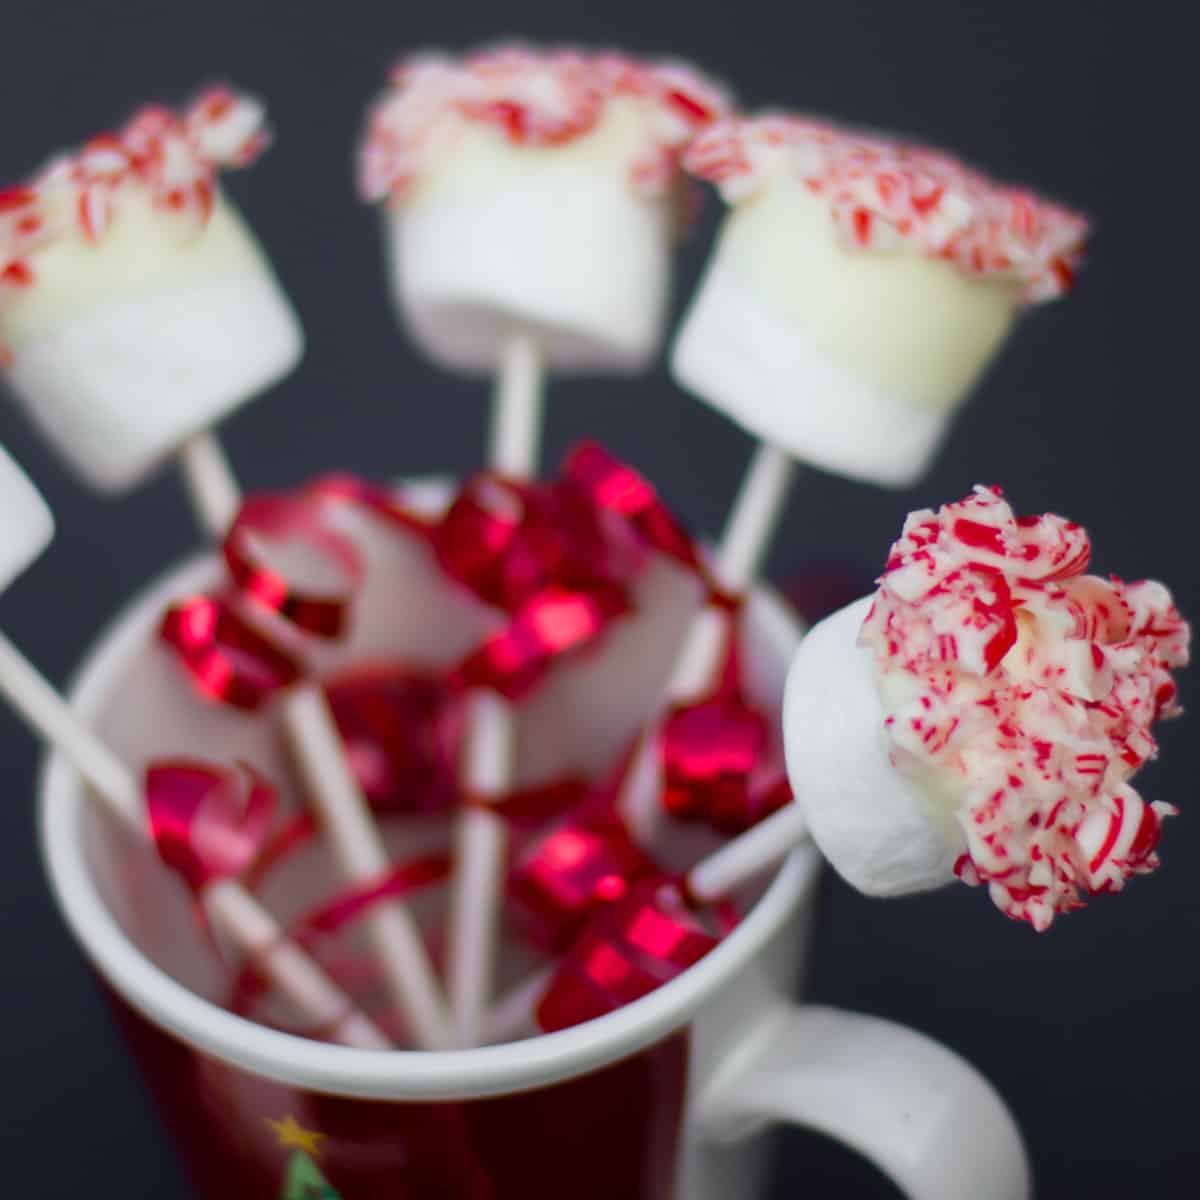 Marshmallow pops in a coffee mug.